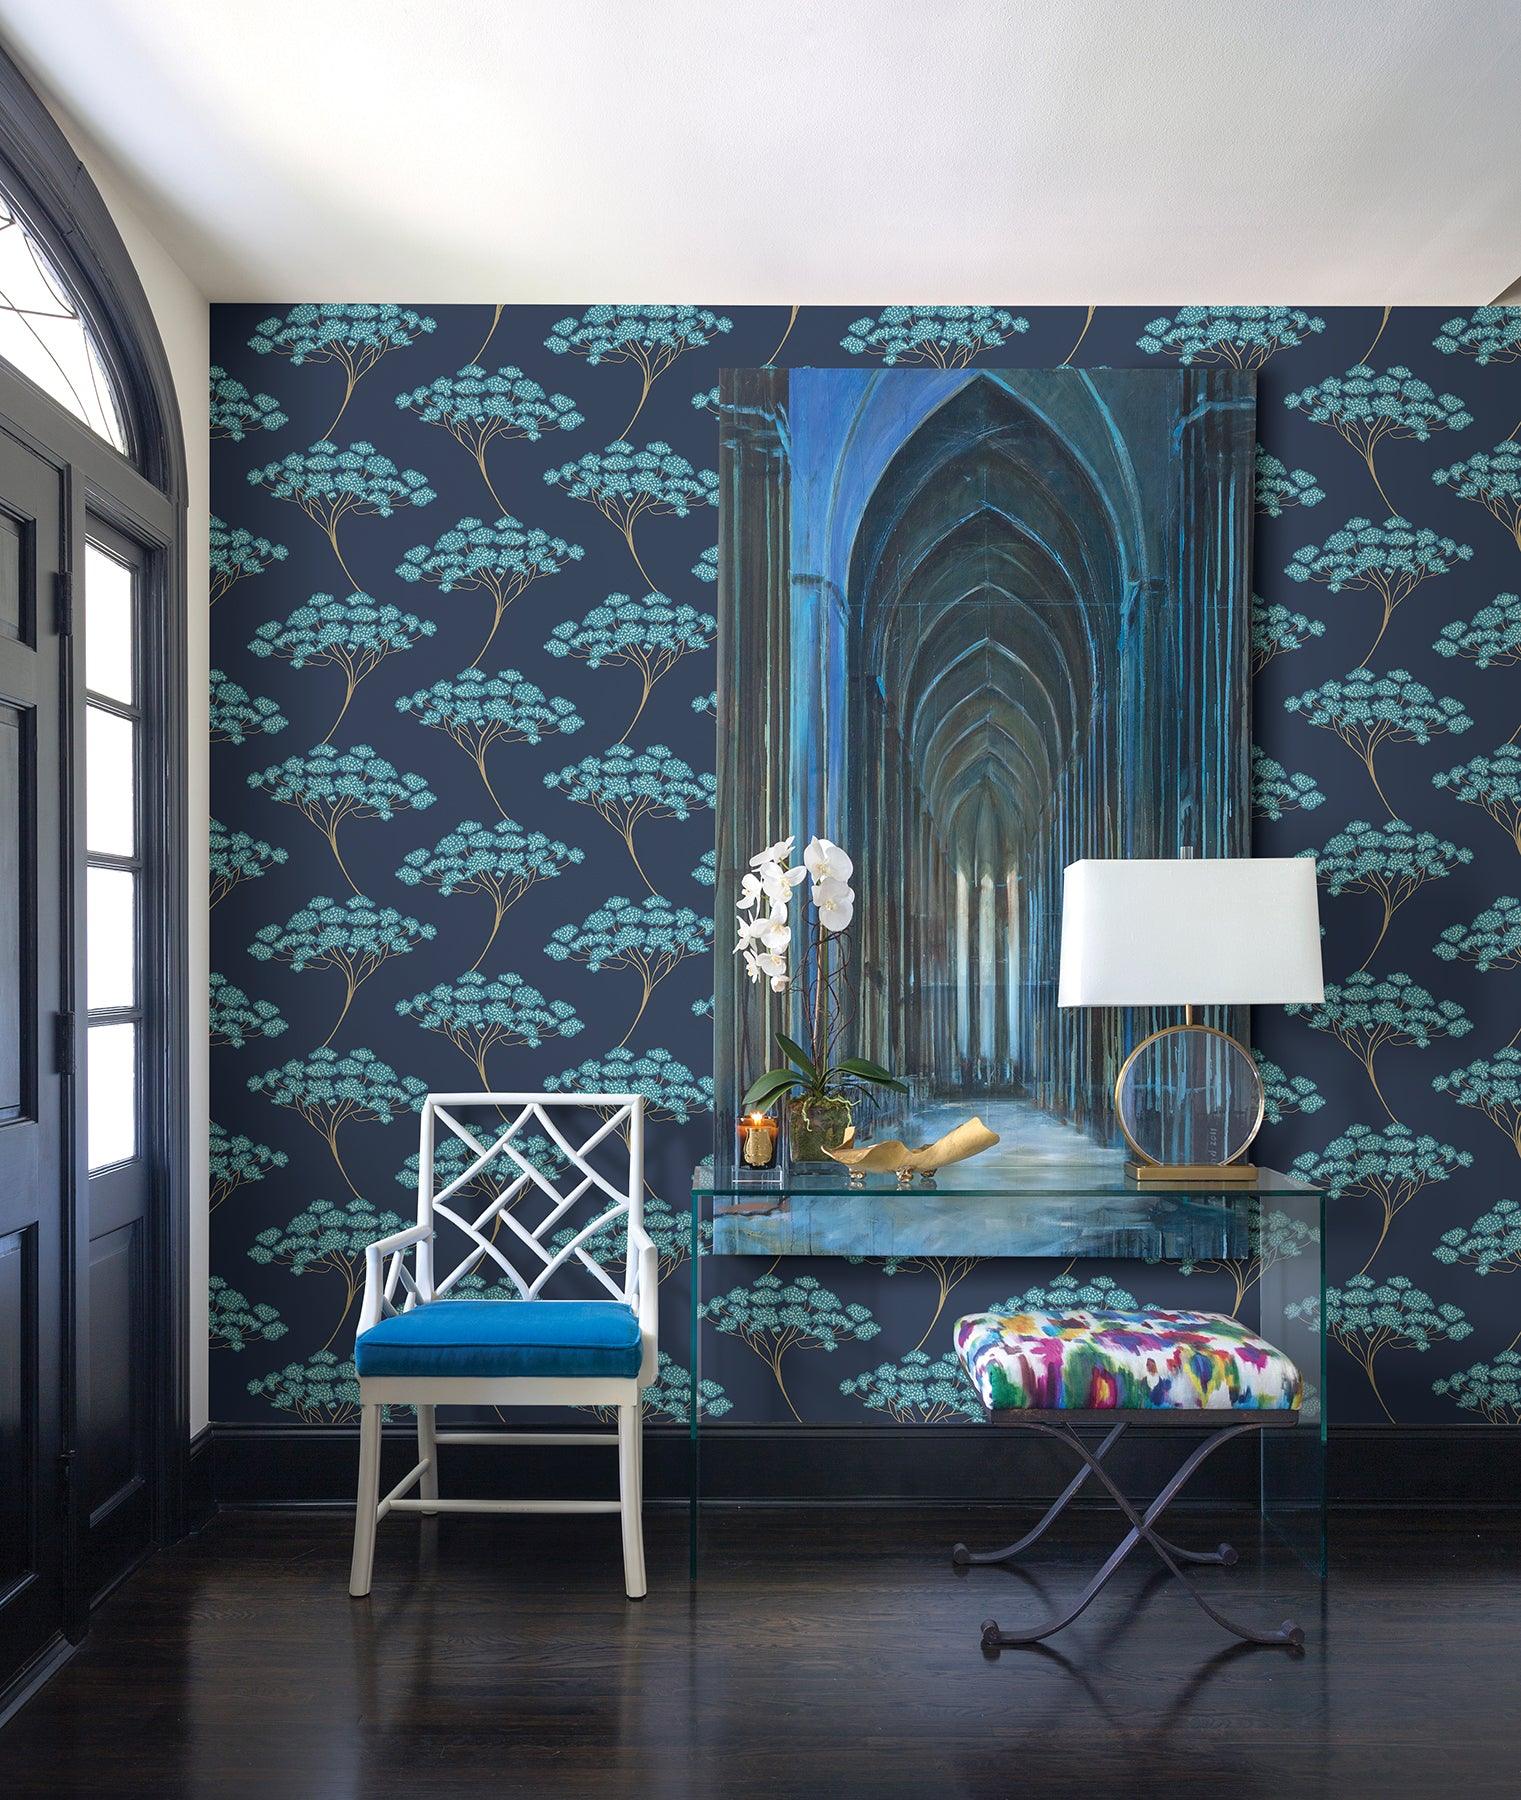 Abundance Blue Tree Wallpaper - Reimagine Designs - 